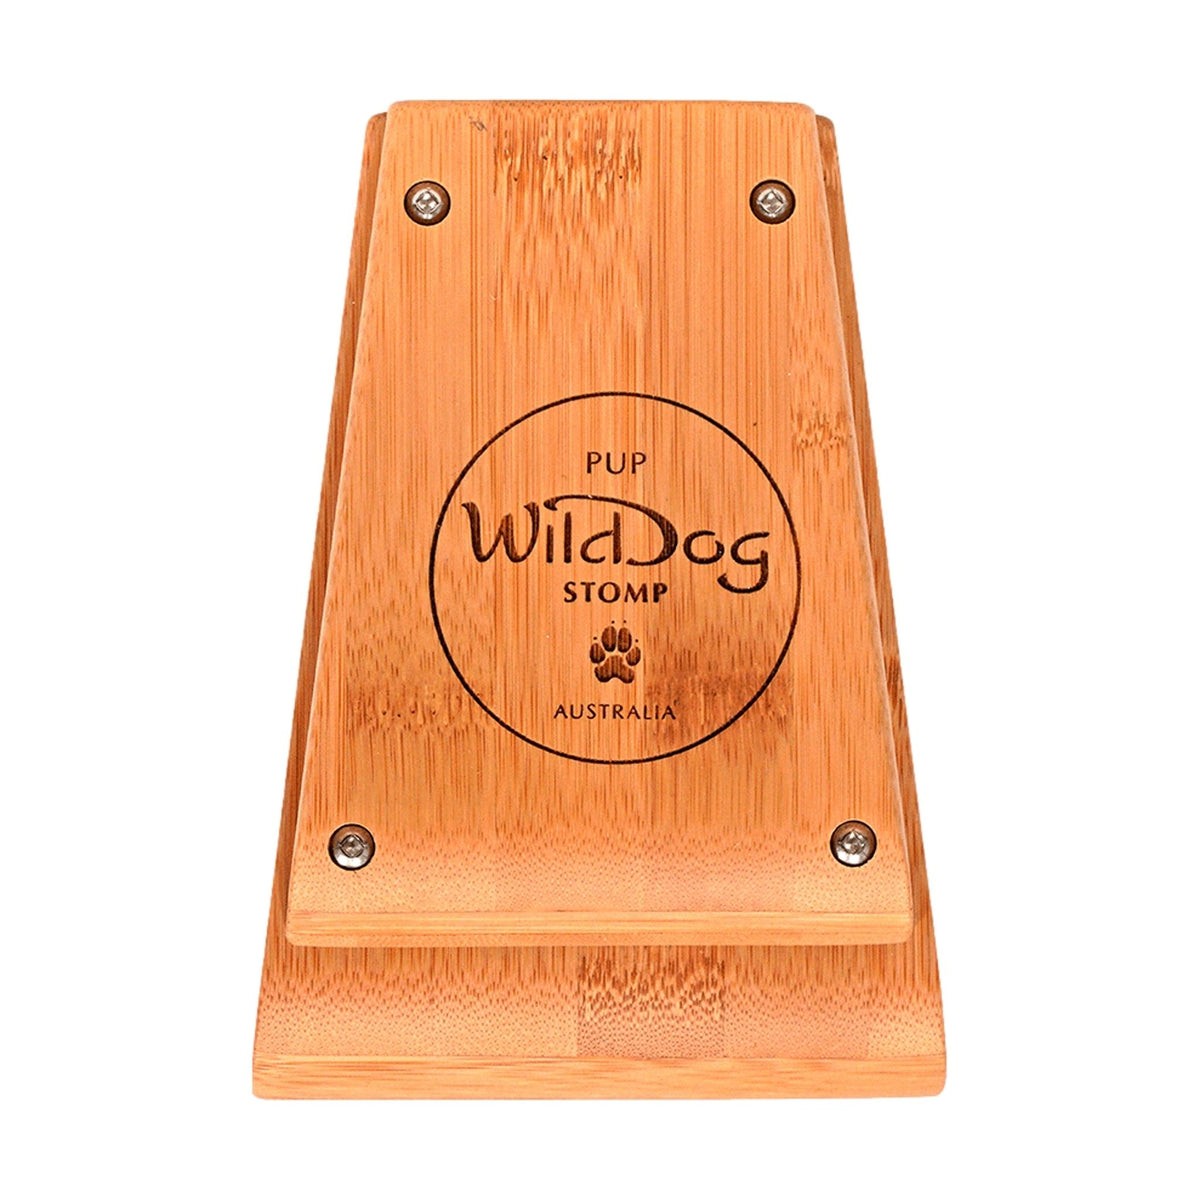 Wild Dog Pup Stomp Box